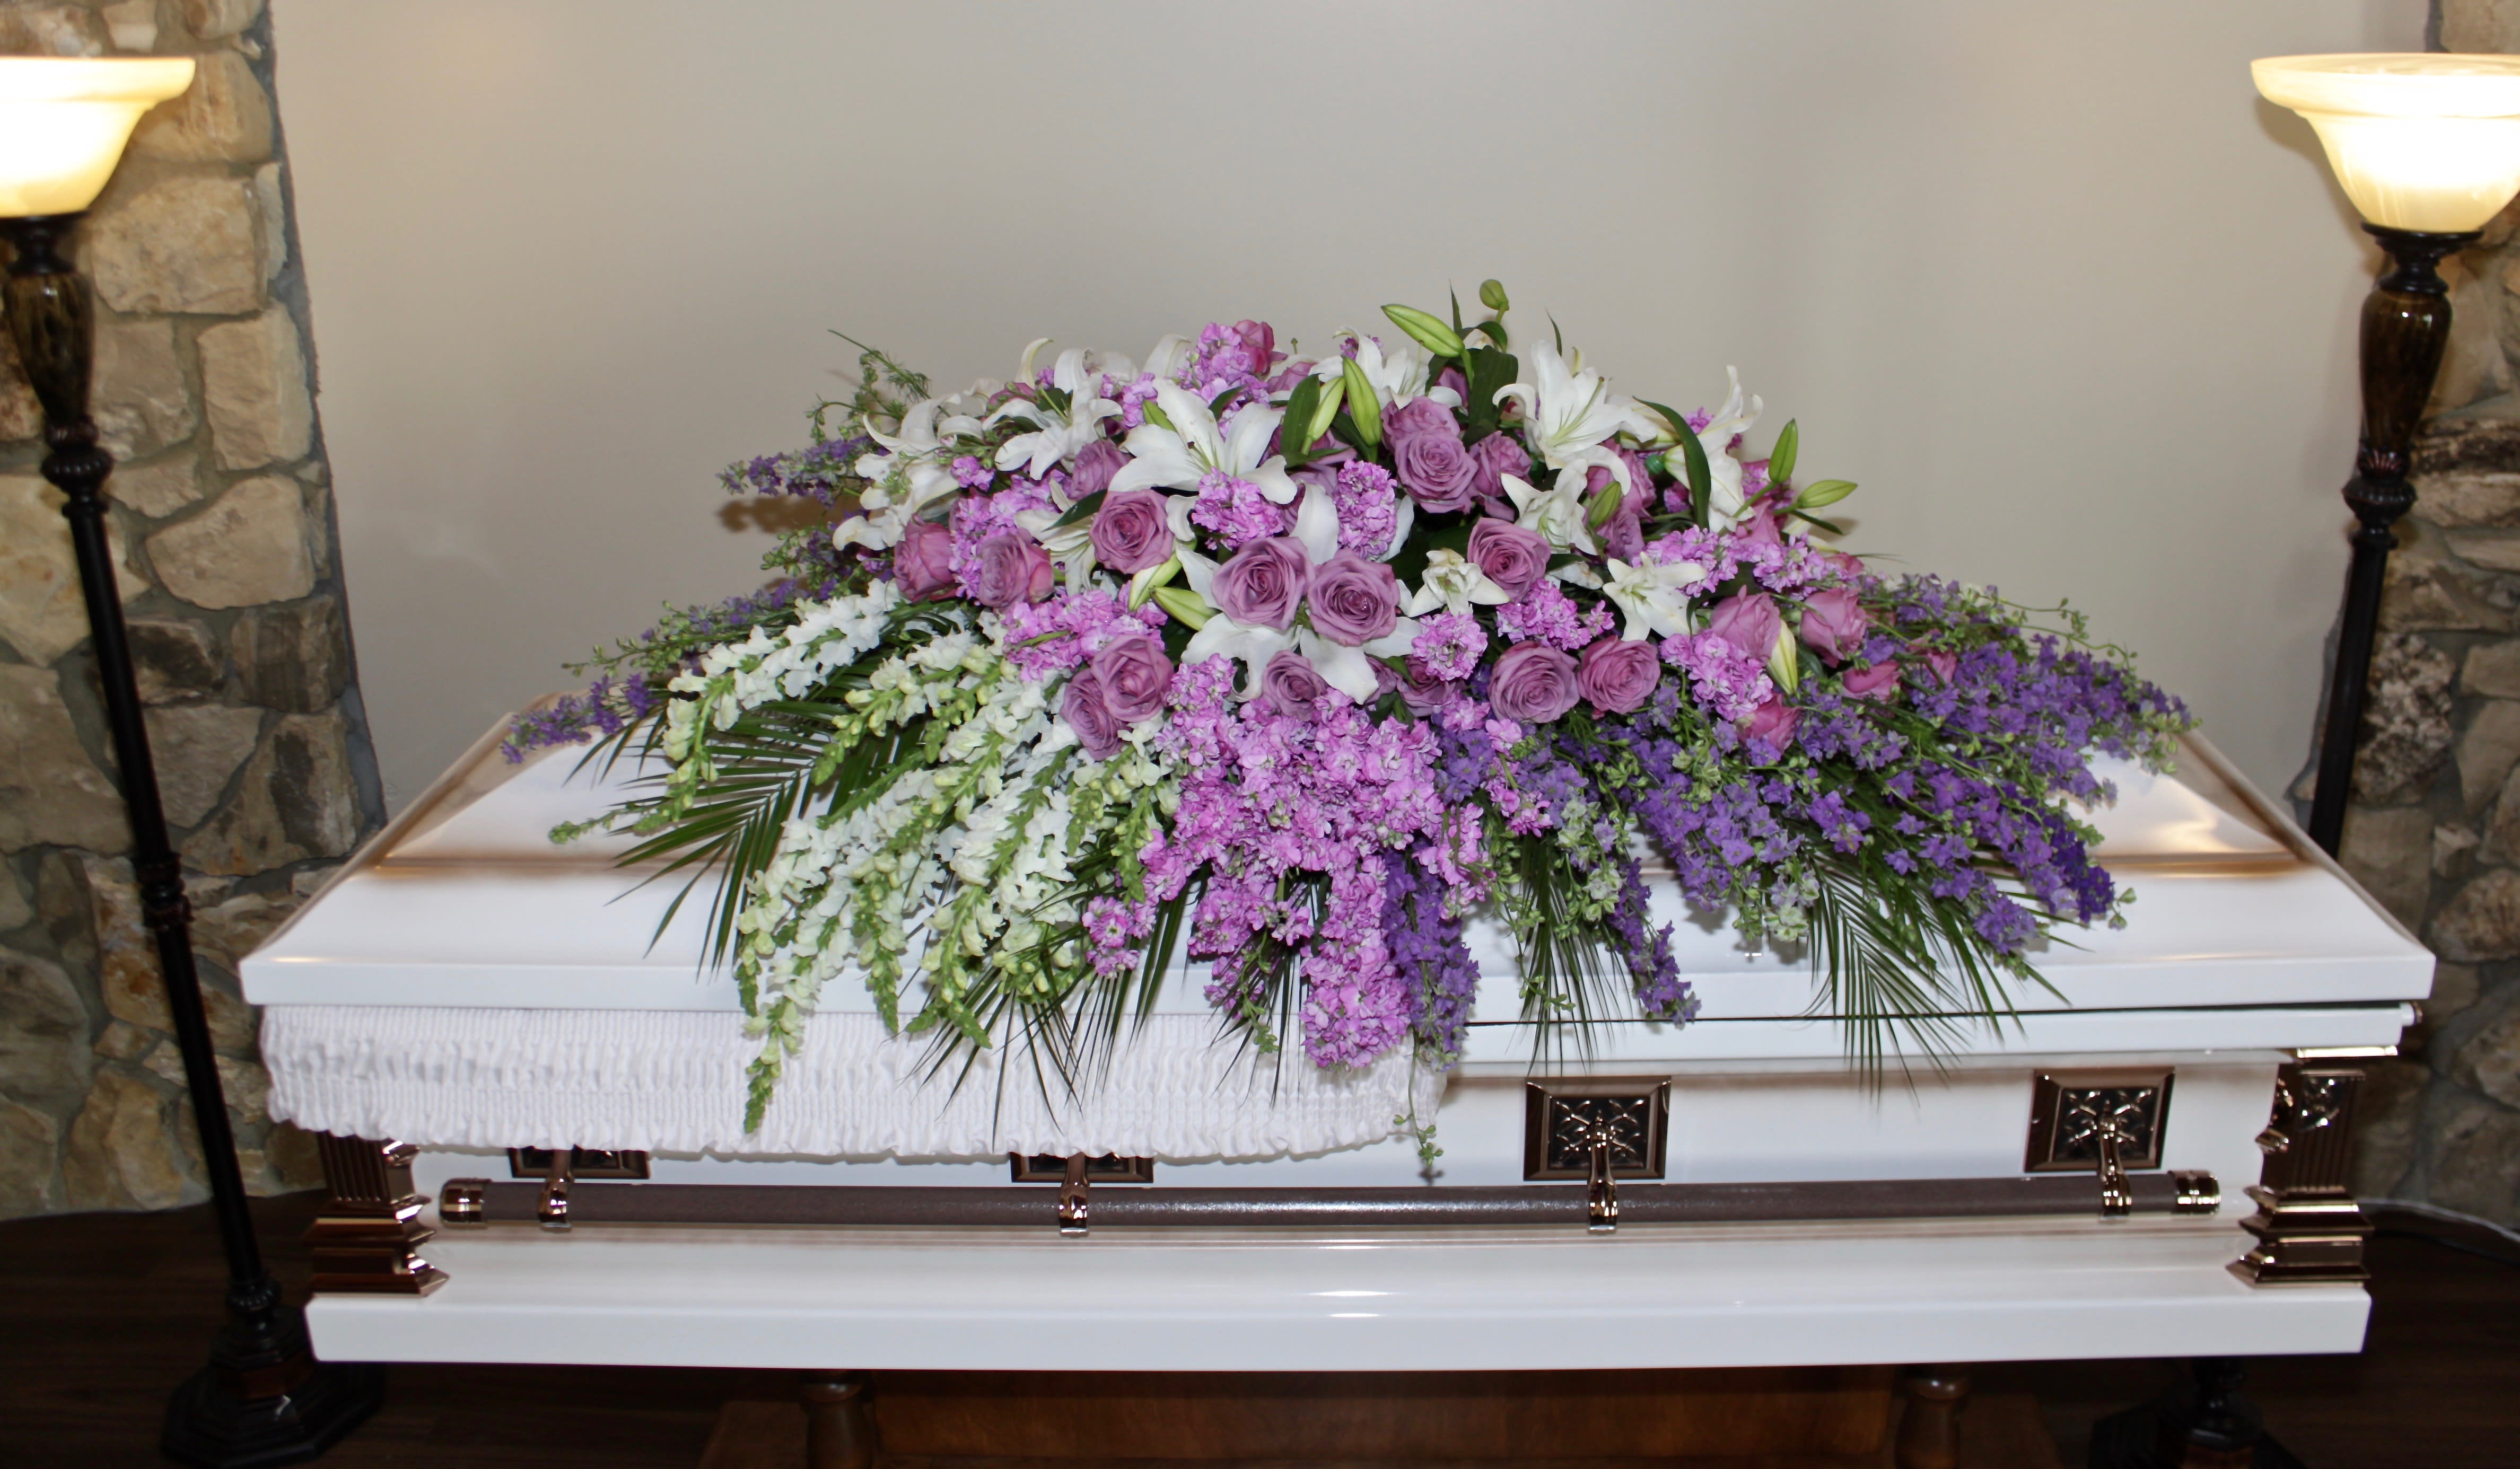 Lavender Rose Casket - My Glendale Florist - This casket arrangement contains several different shades of lavender florals. 